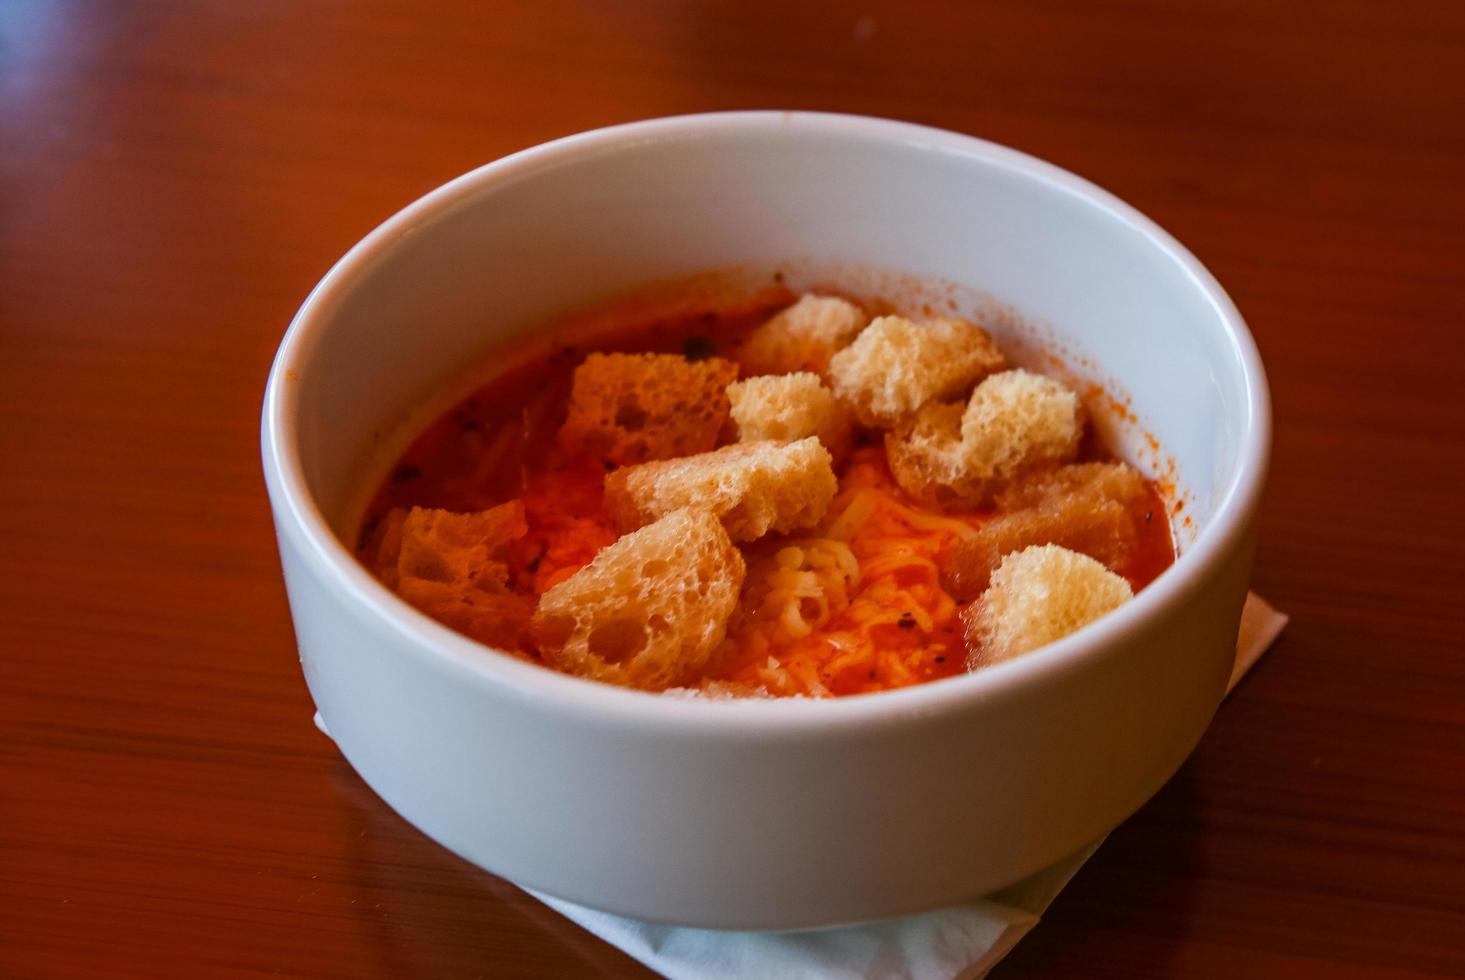 sopa de tomate na tigela foto